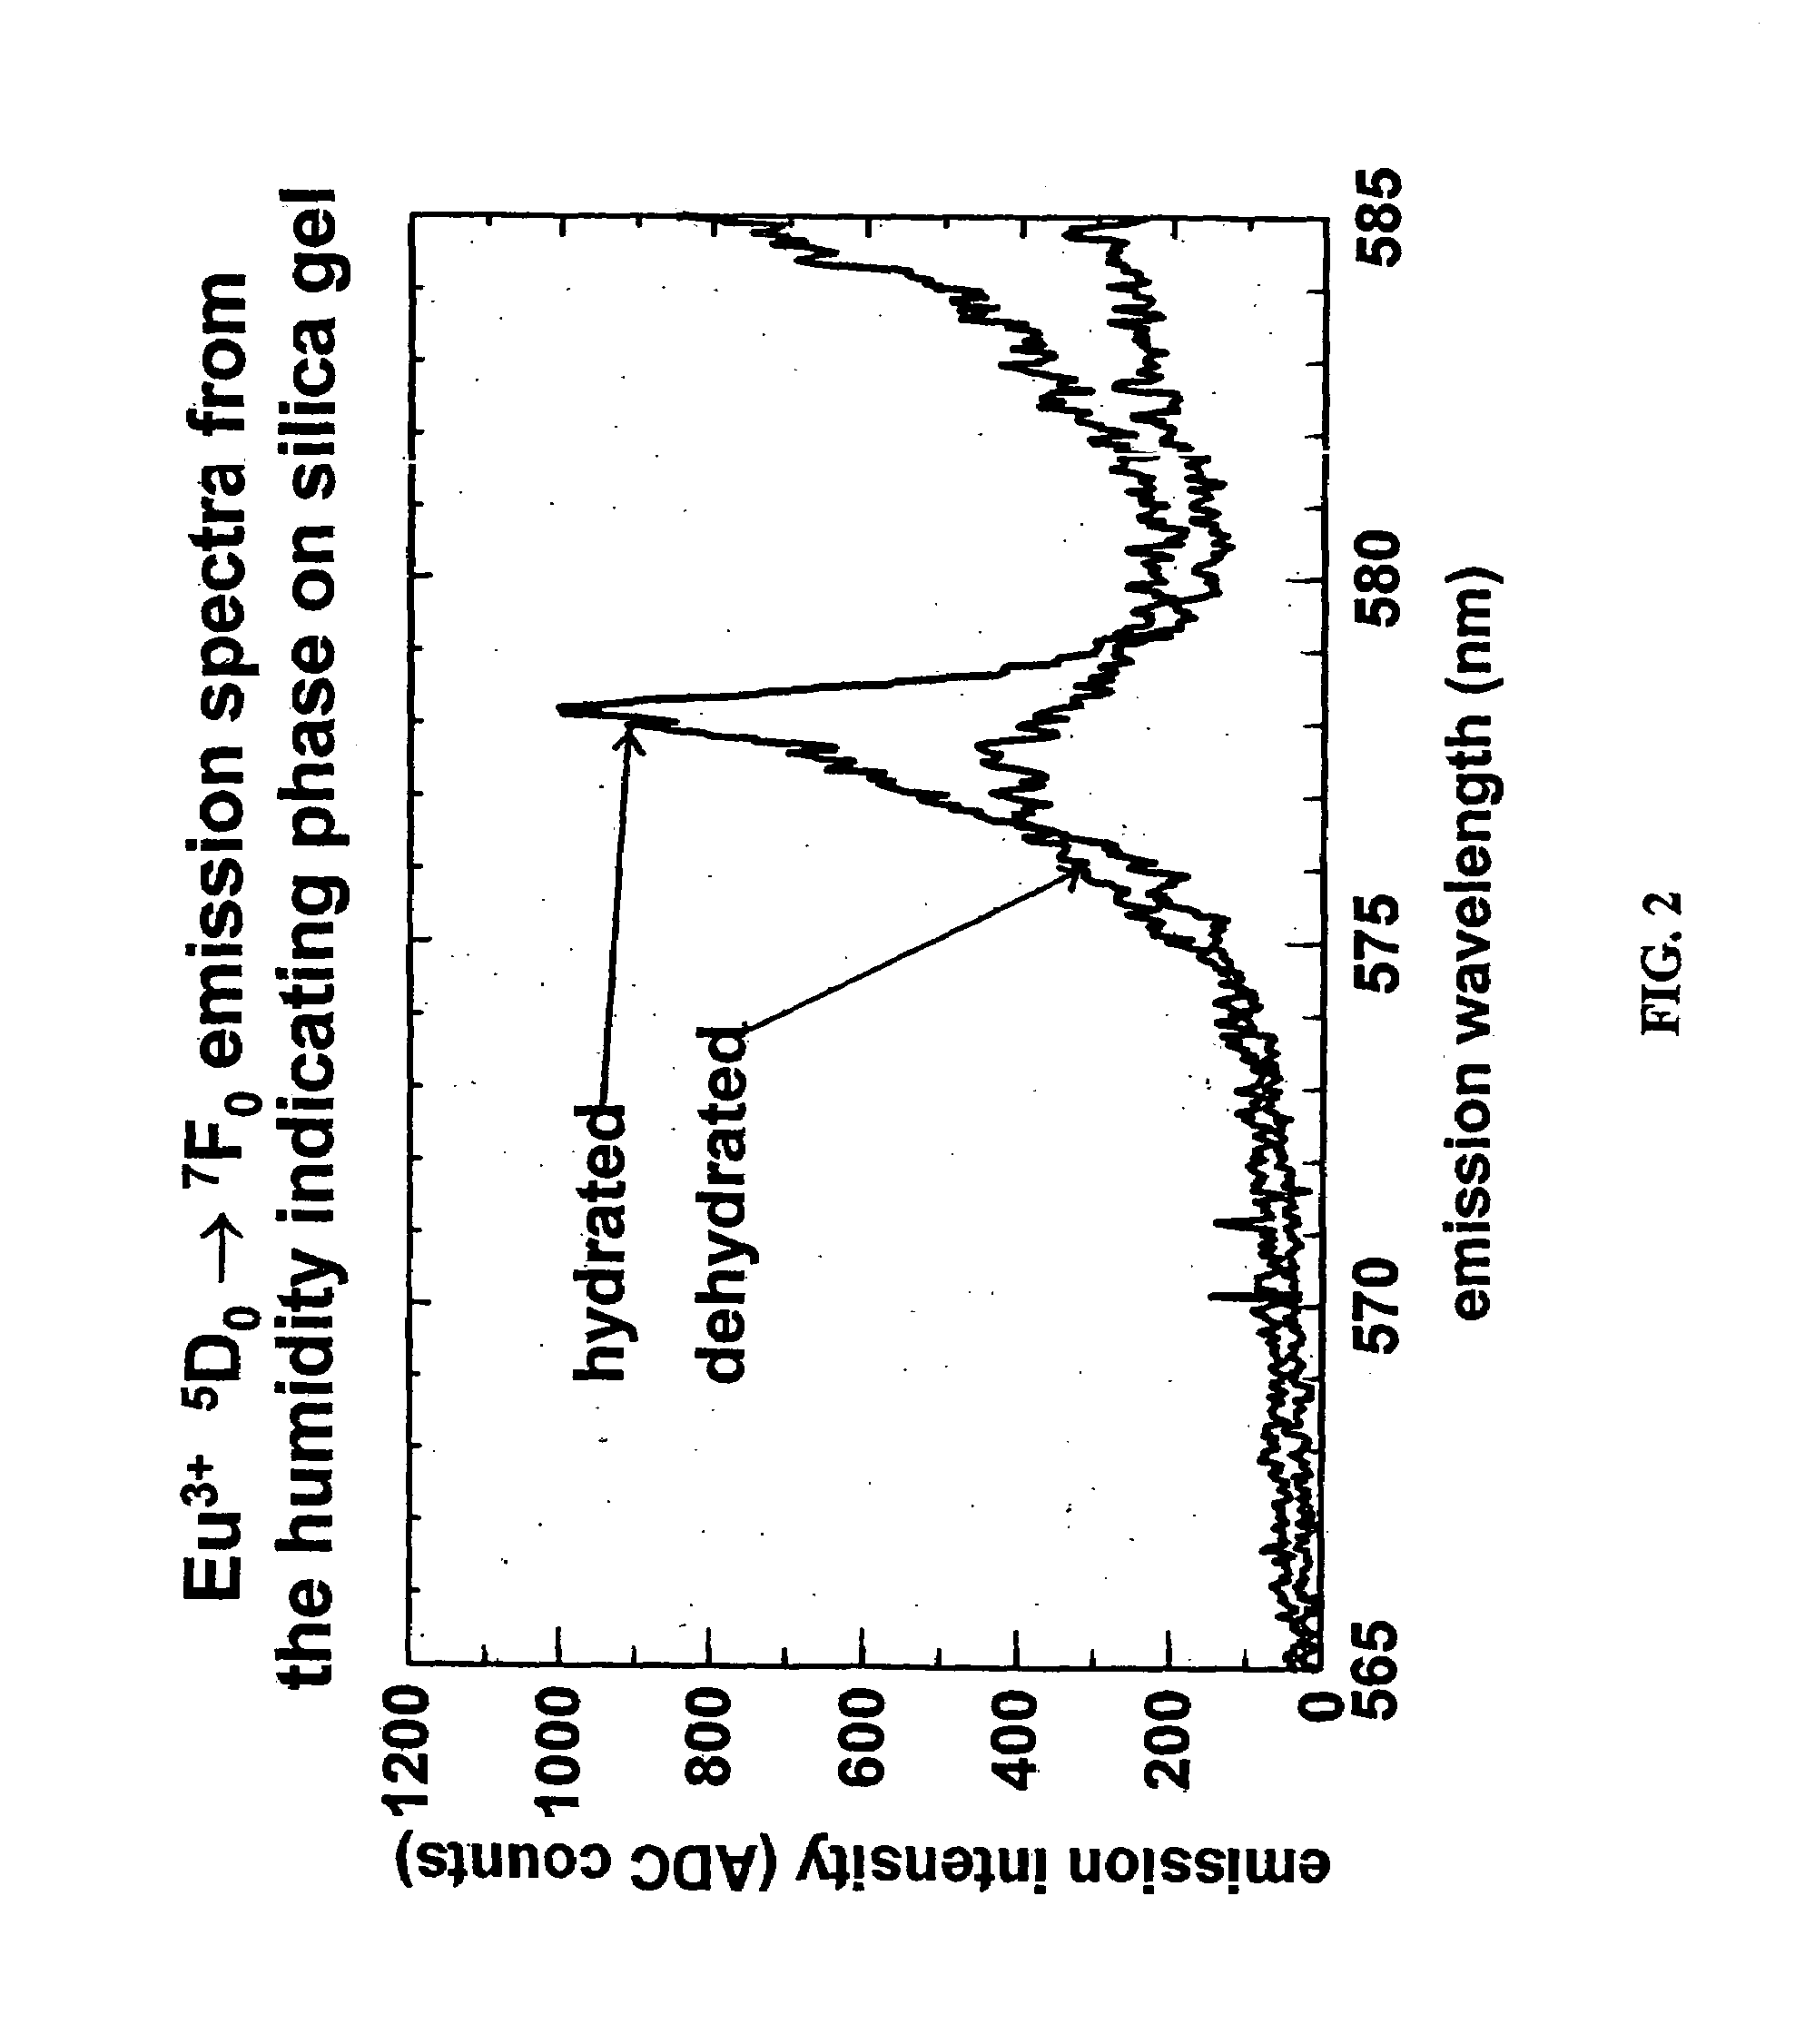 Lanthanide-halide based humidity indicators